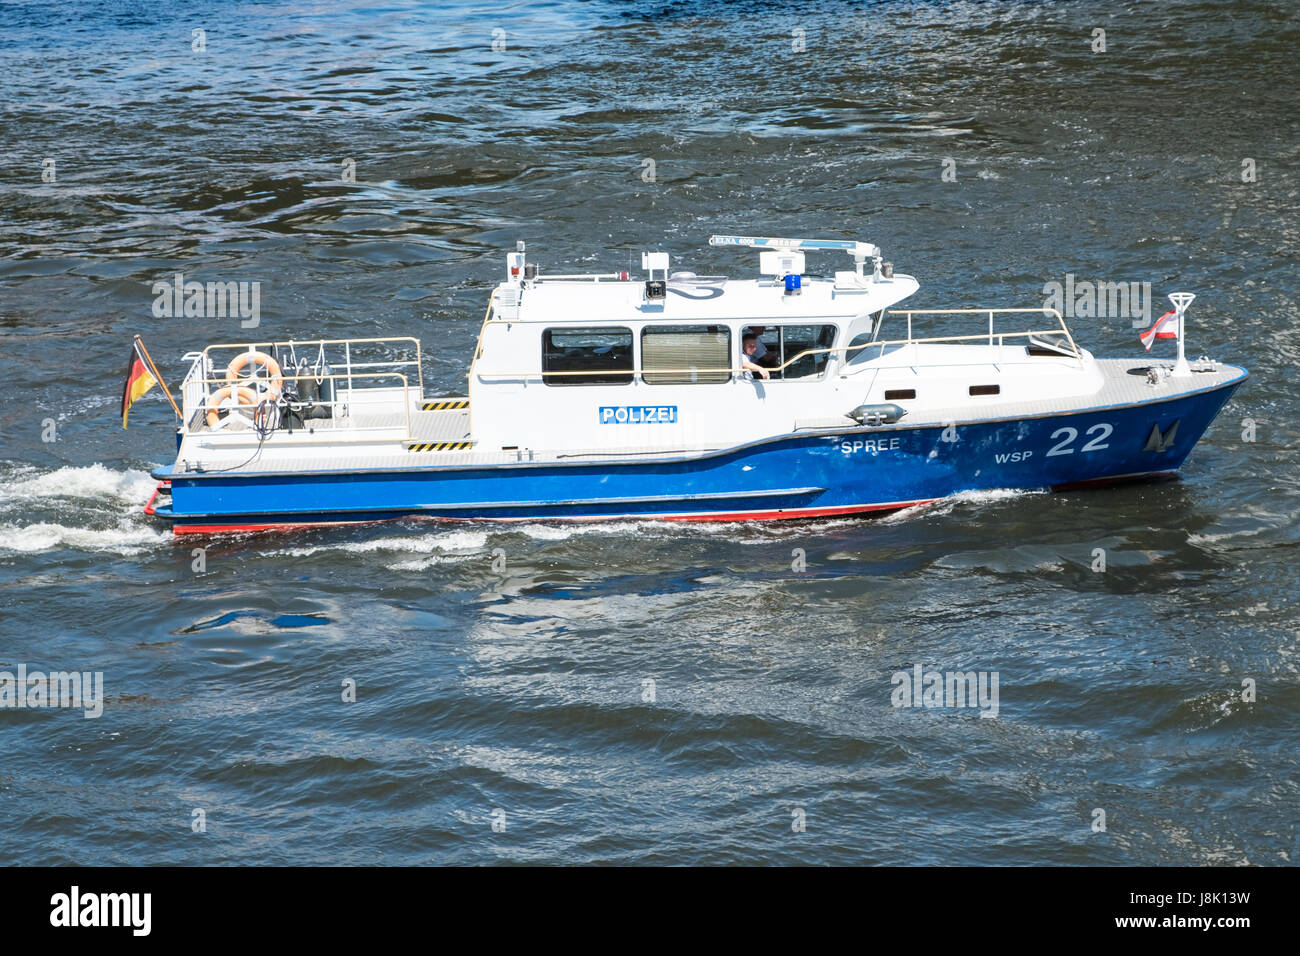 Berlin, Germany - may 27, 2017: German police boat on river Spree in Berlin, Germany Stock Photo